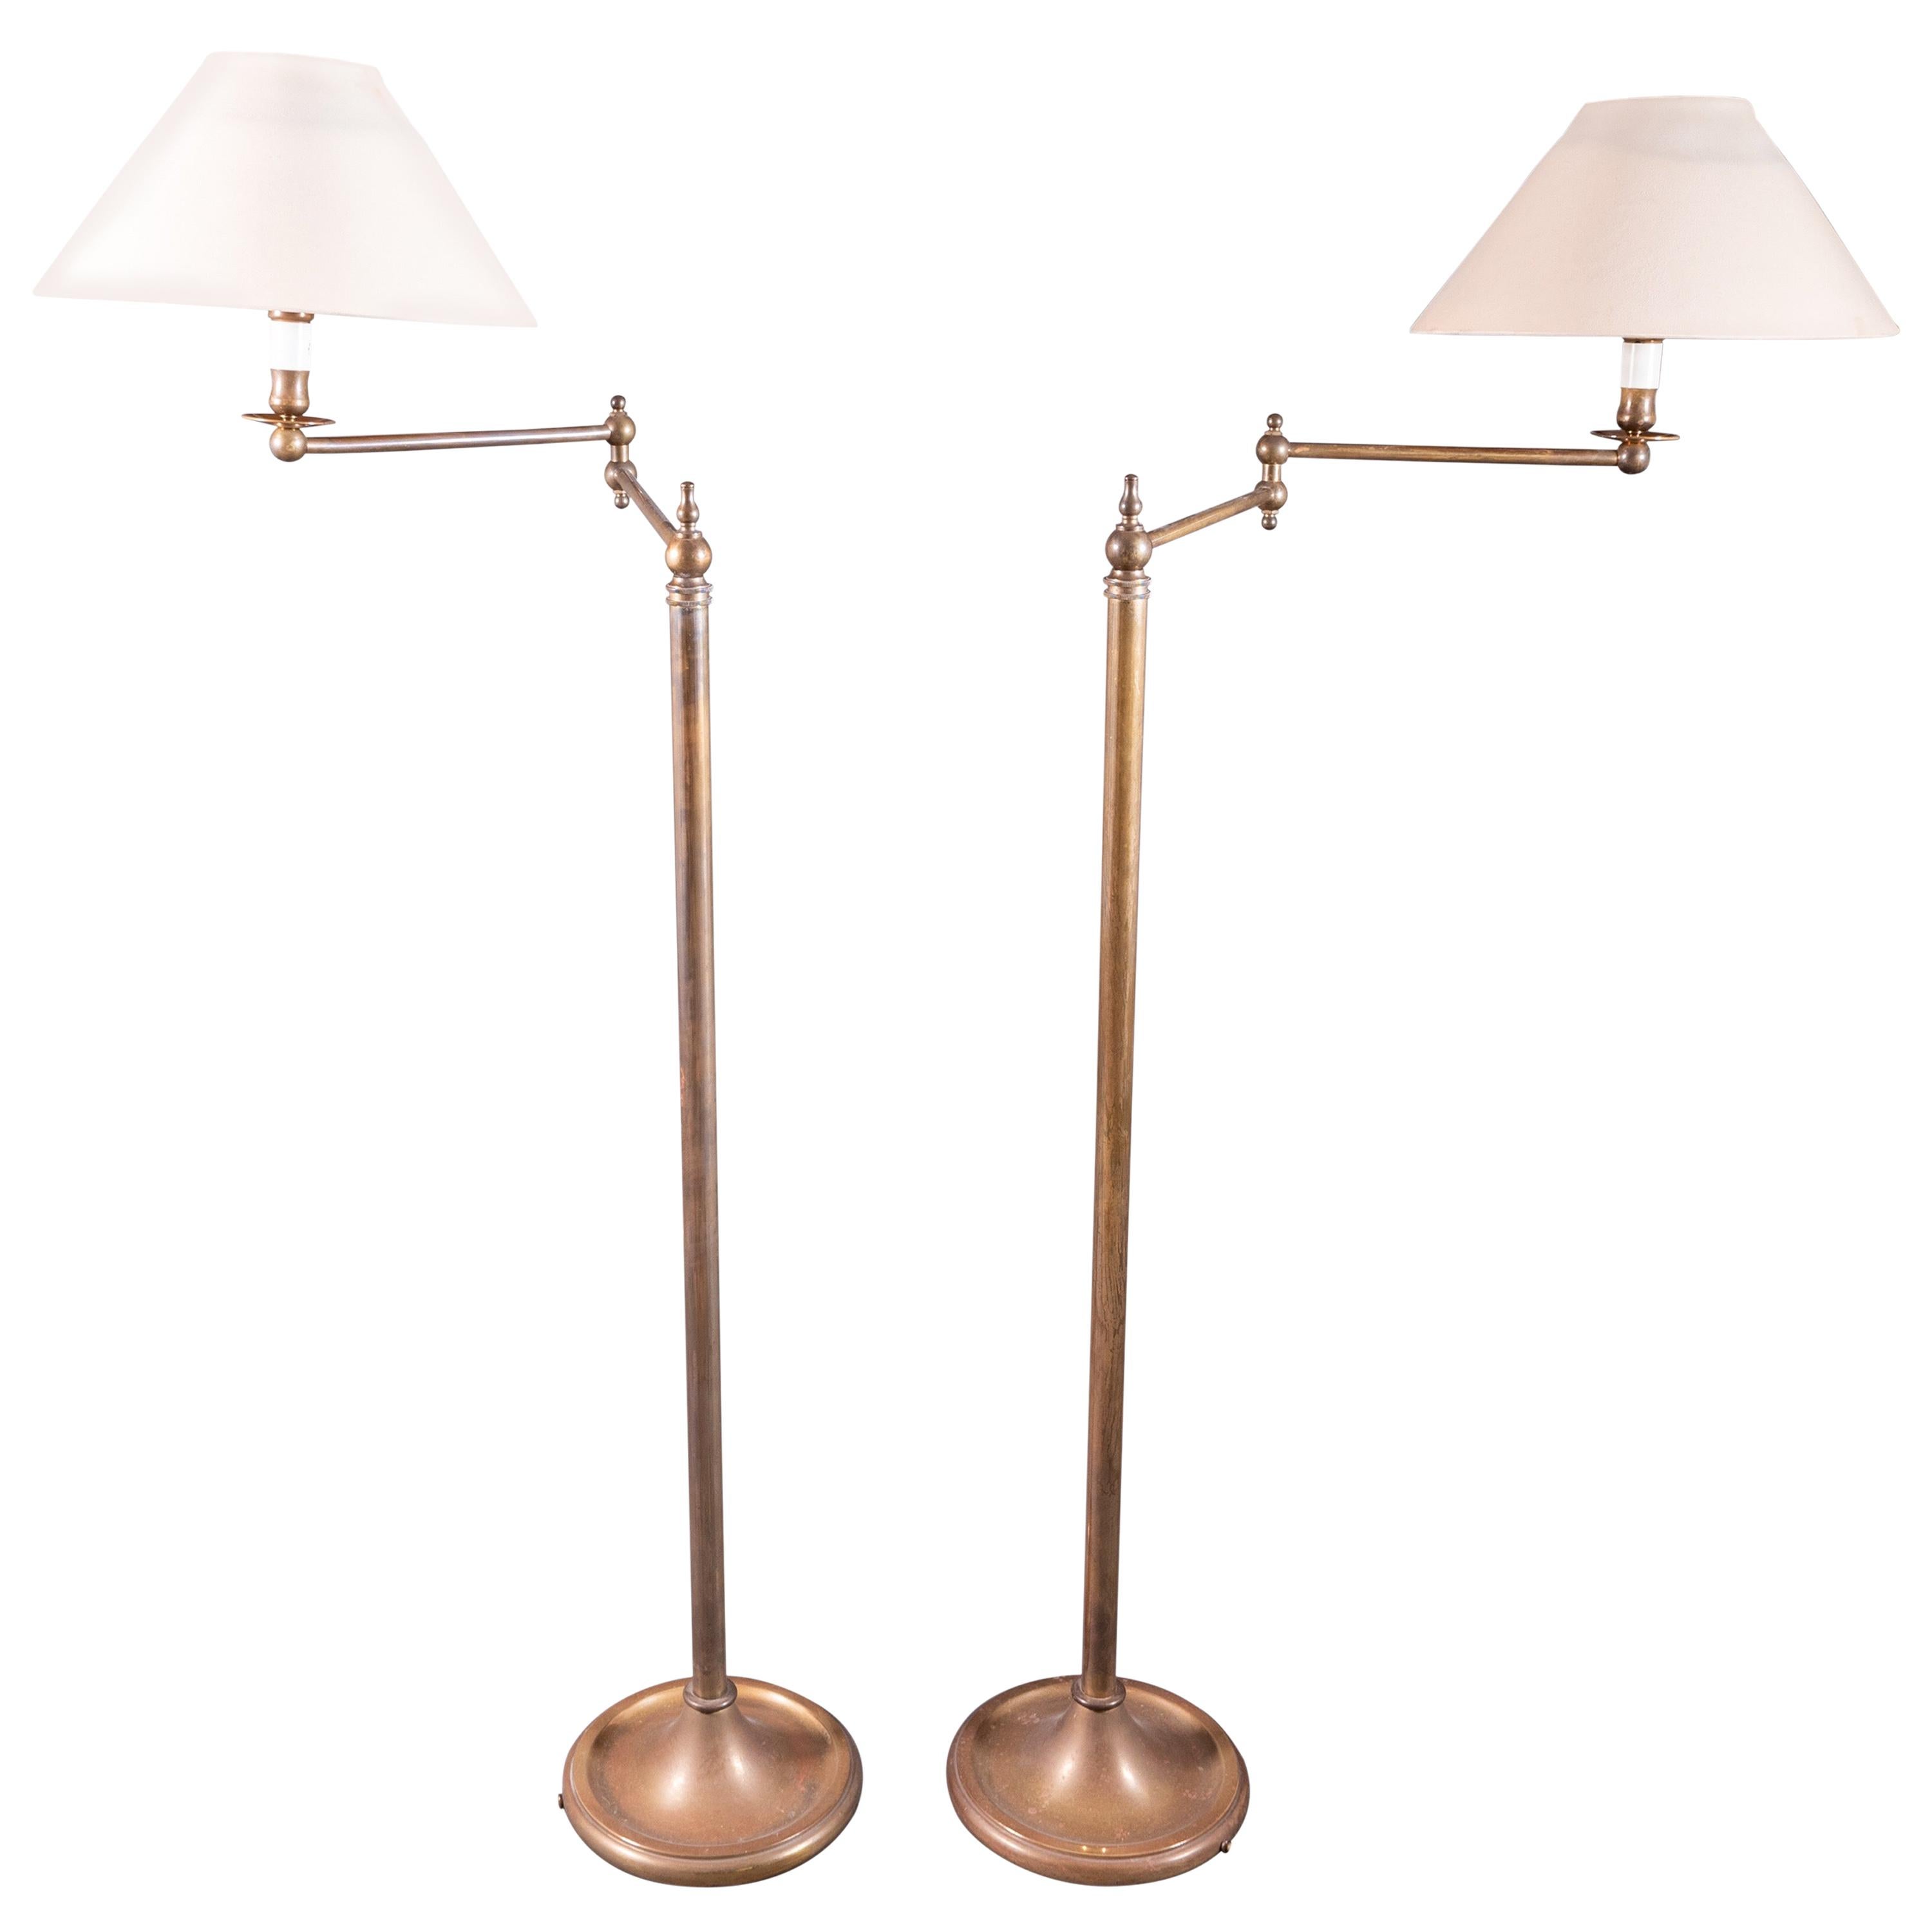 Pair of French Floor Lamps in Golden Brass